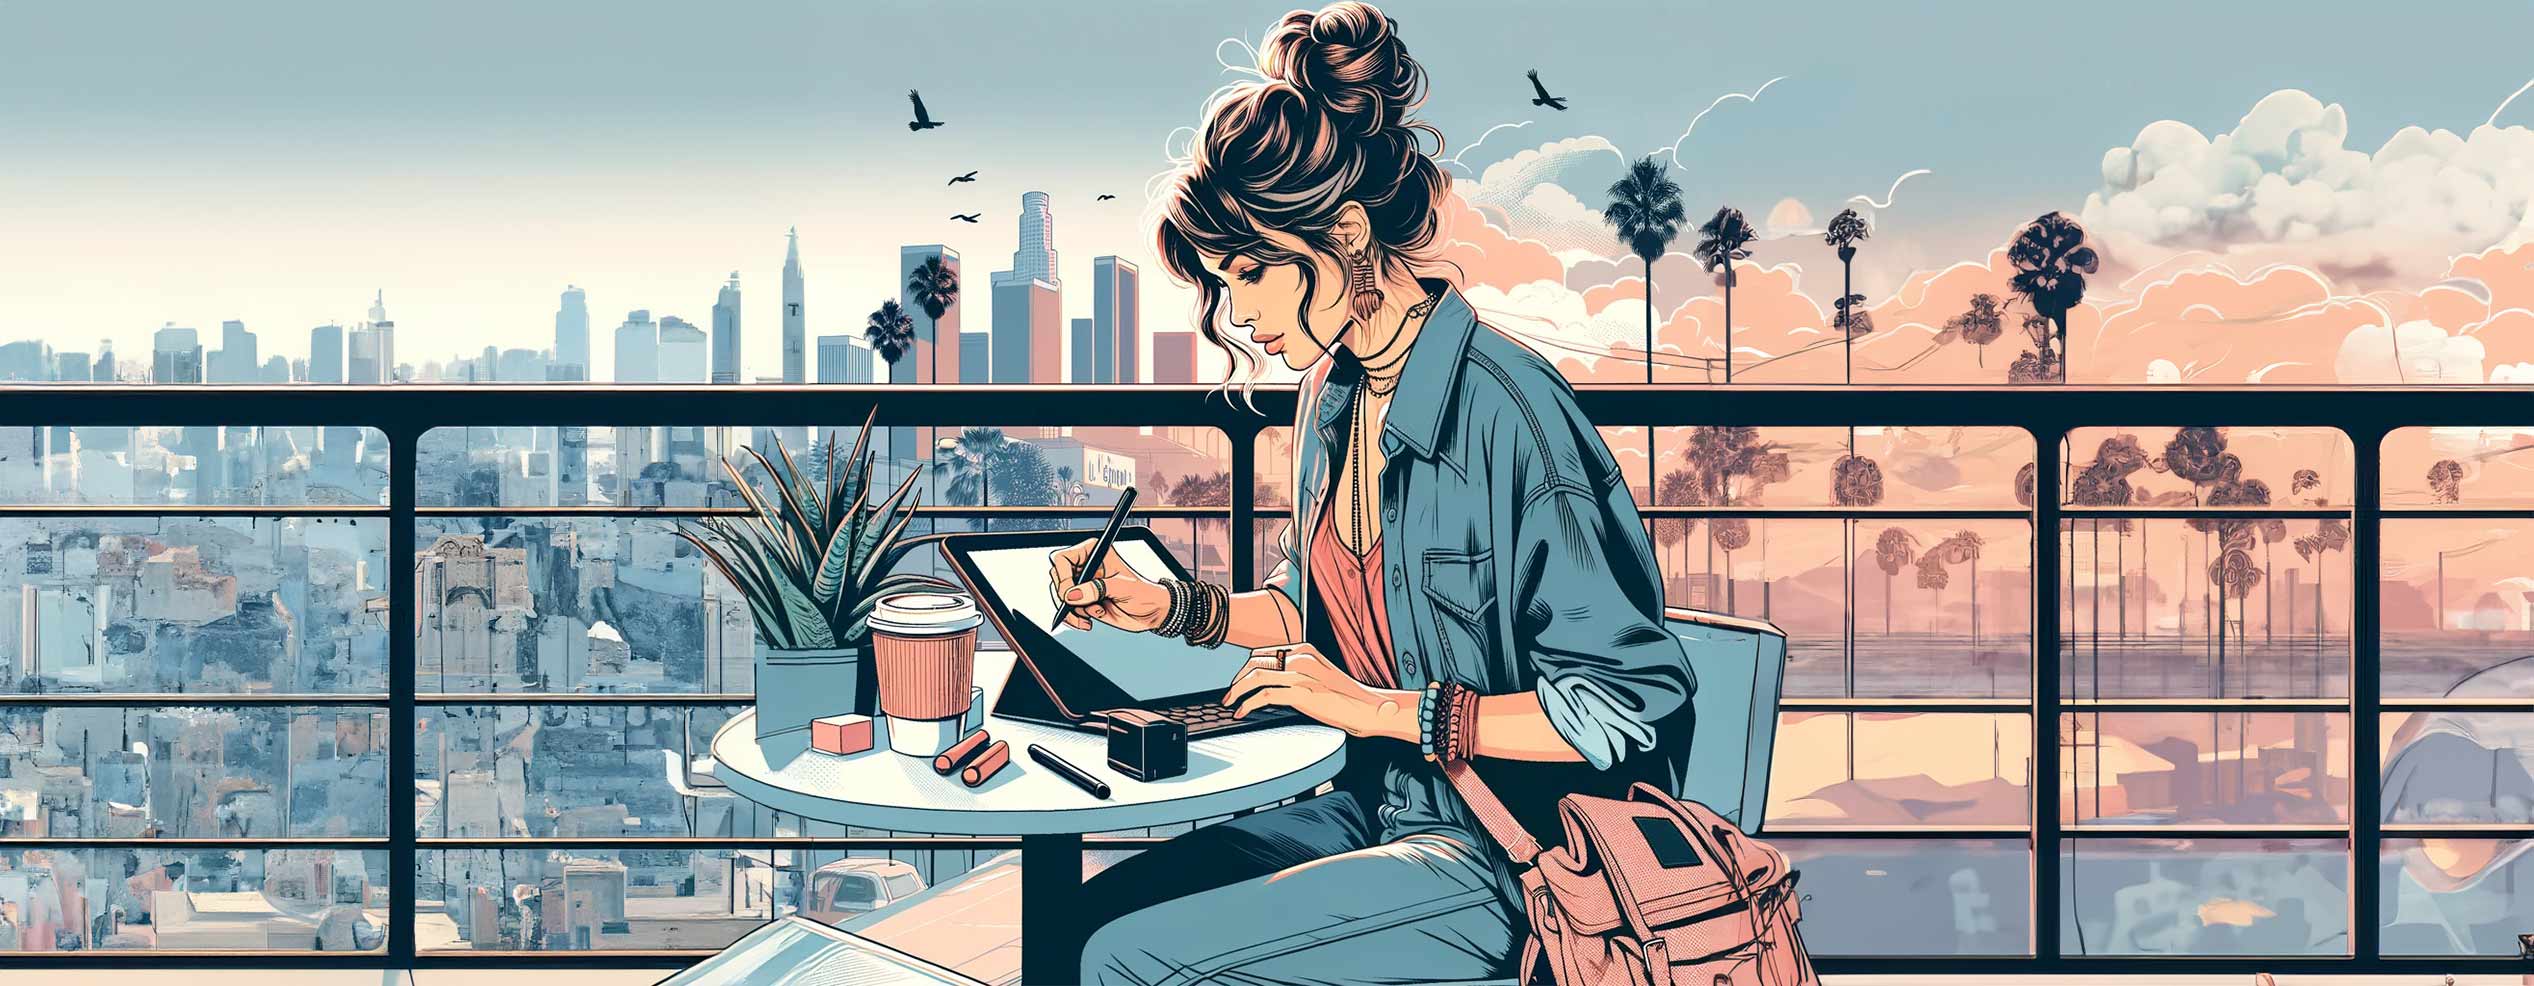 freelance graphic designer in Los Angeles cafe - illustration